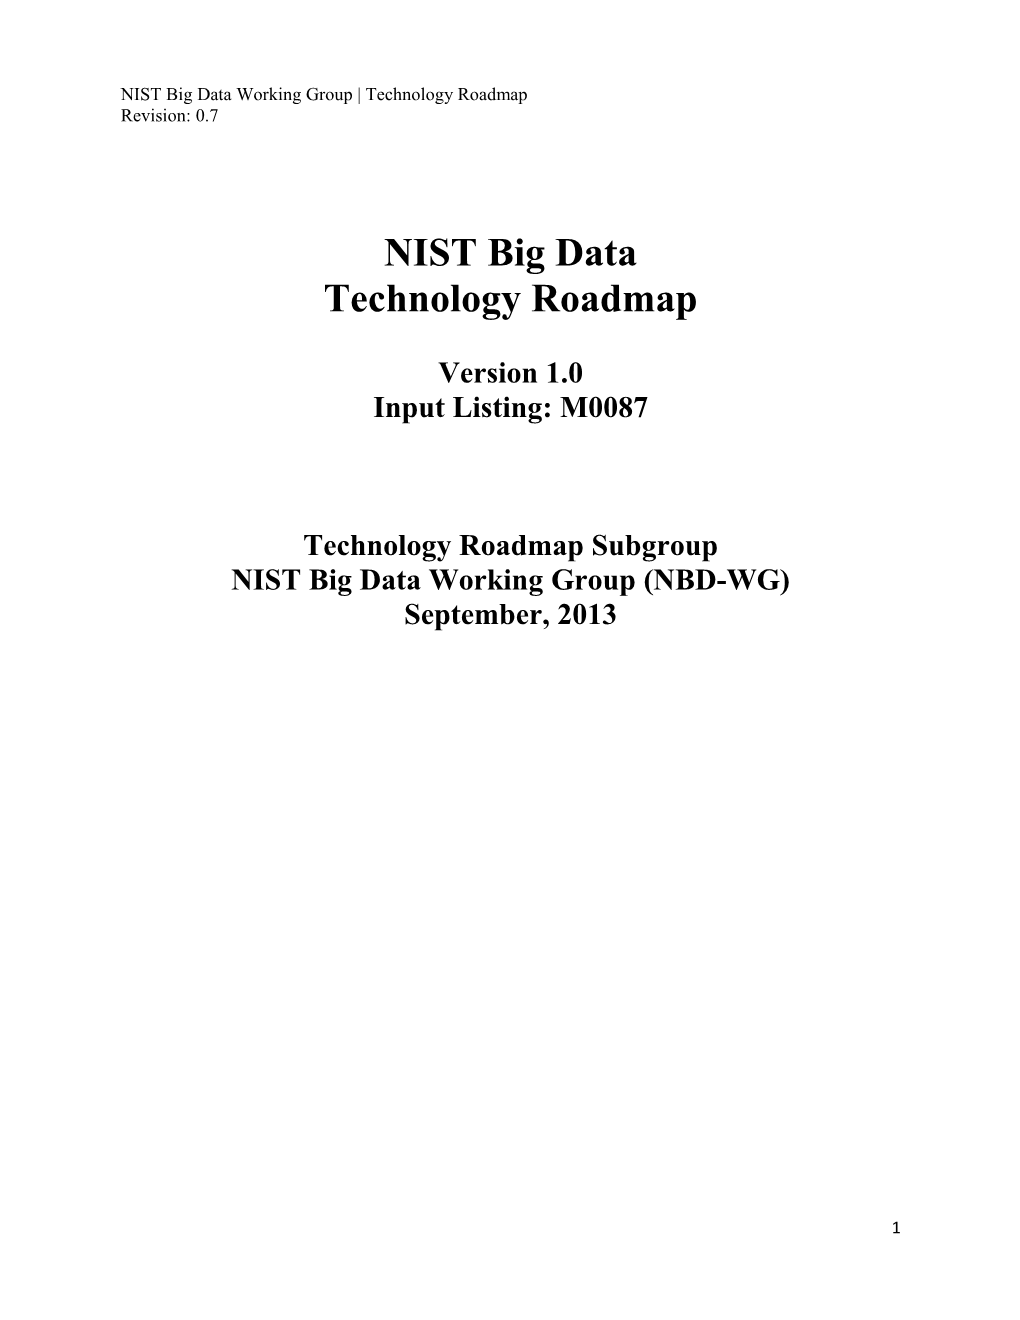 NIST Big Data Working Group Technology Roadmap s1